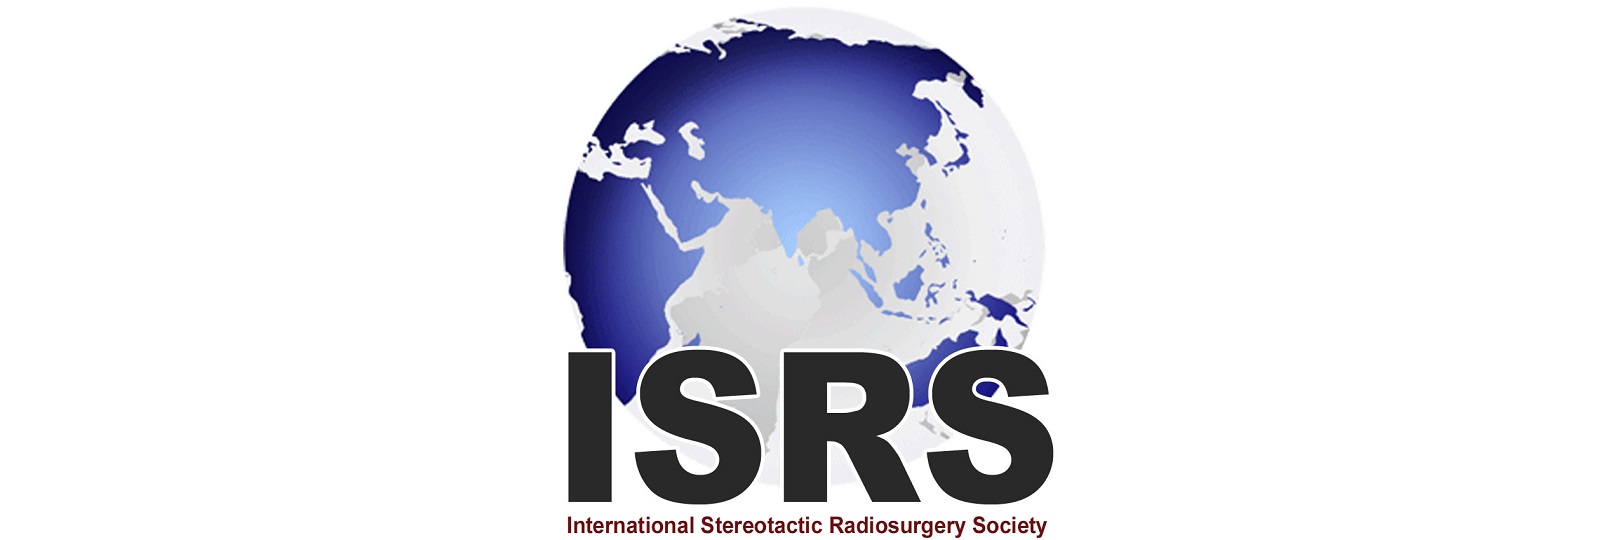 International Stereotatic Radiosurgery Society